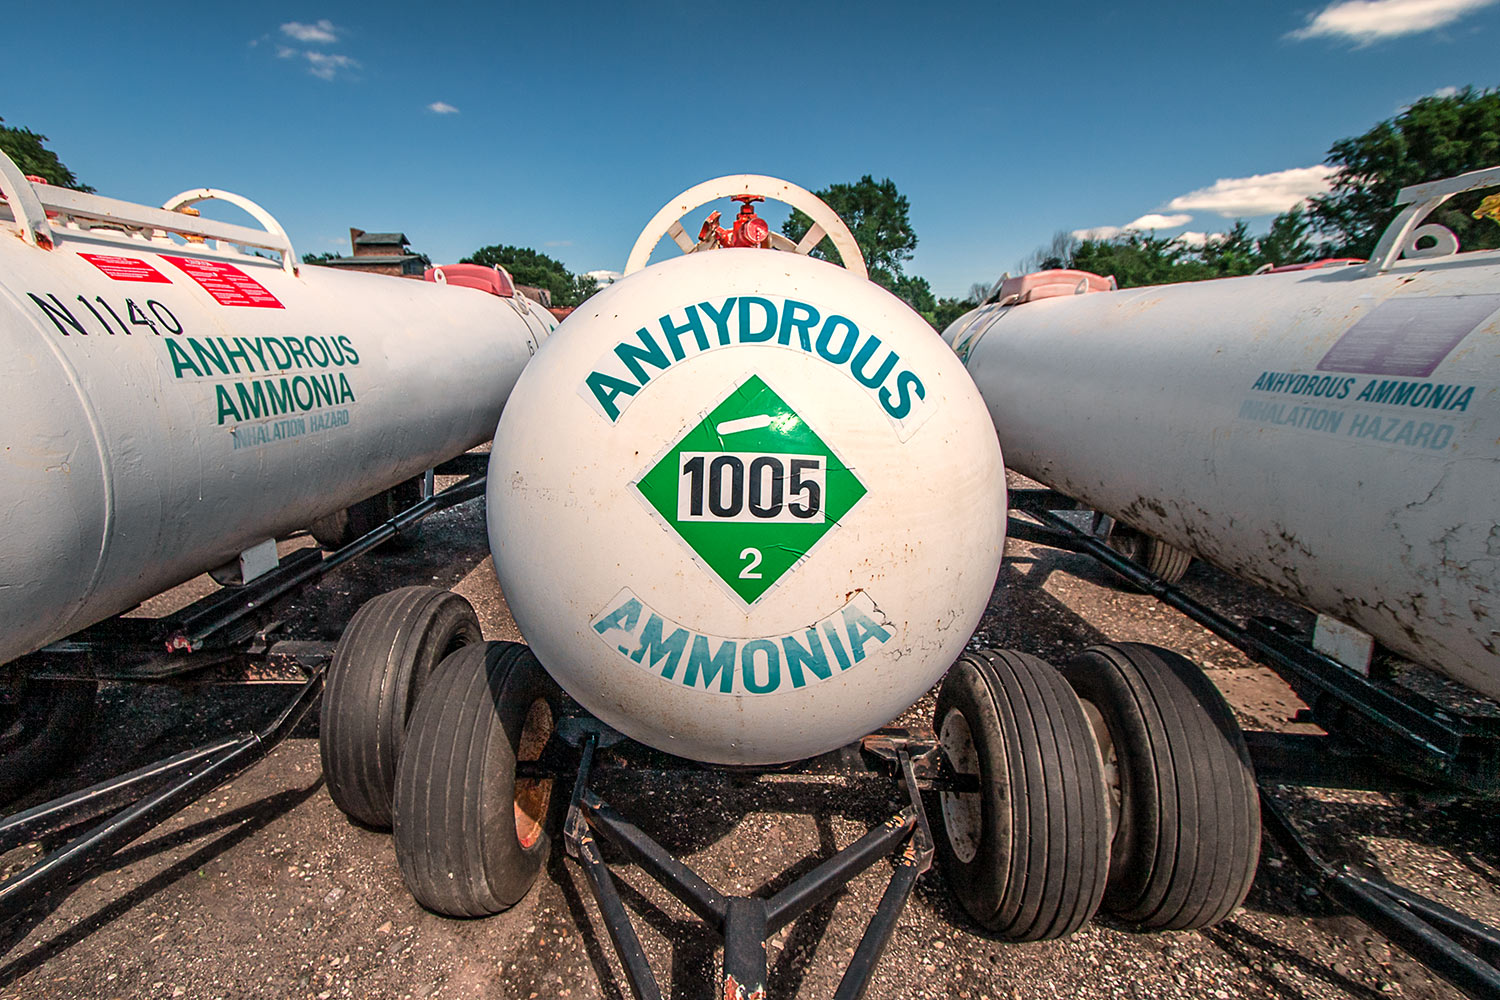 Anhydrous Ammonia